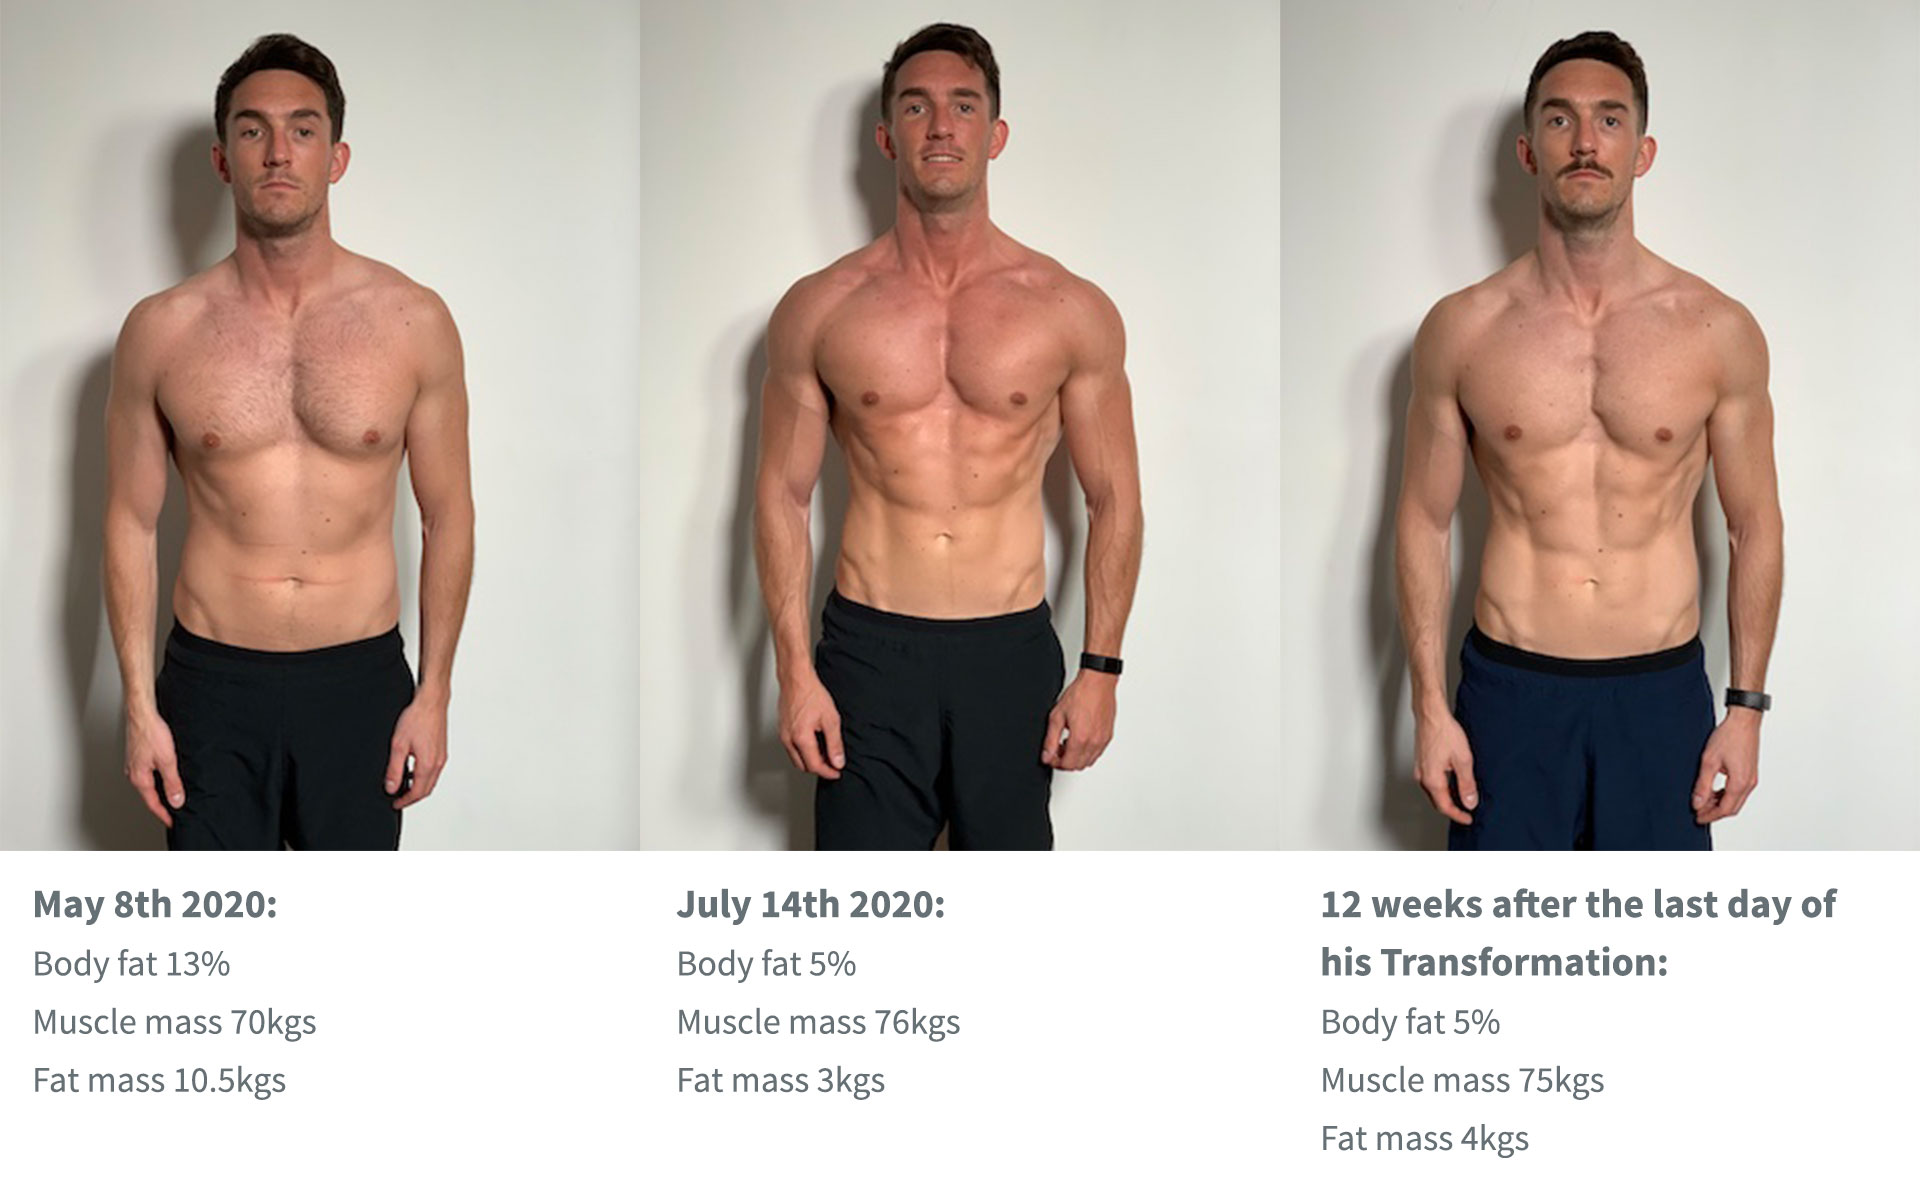 Chris lose 8% body fat in 10 weeks